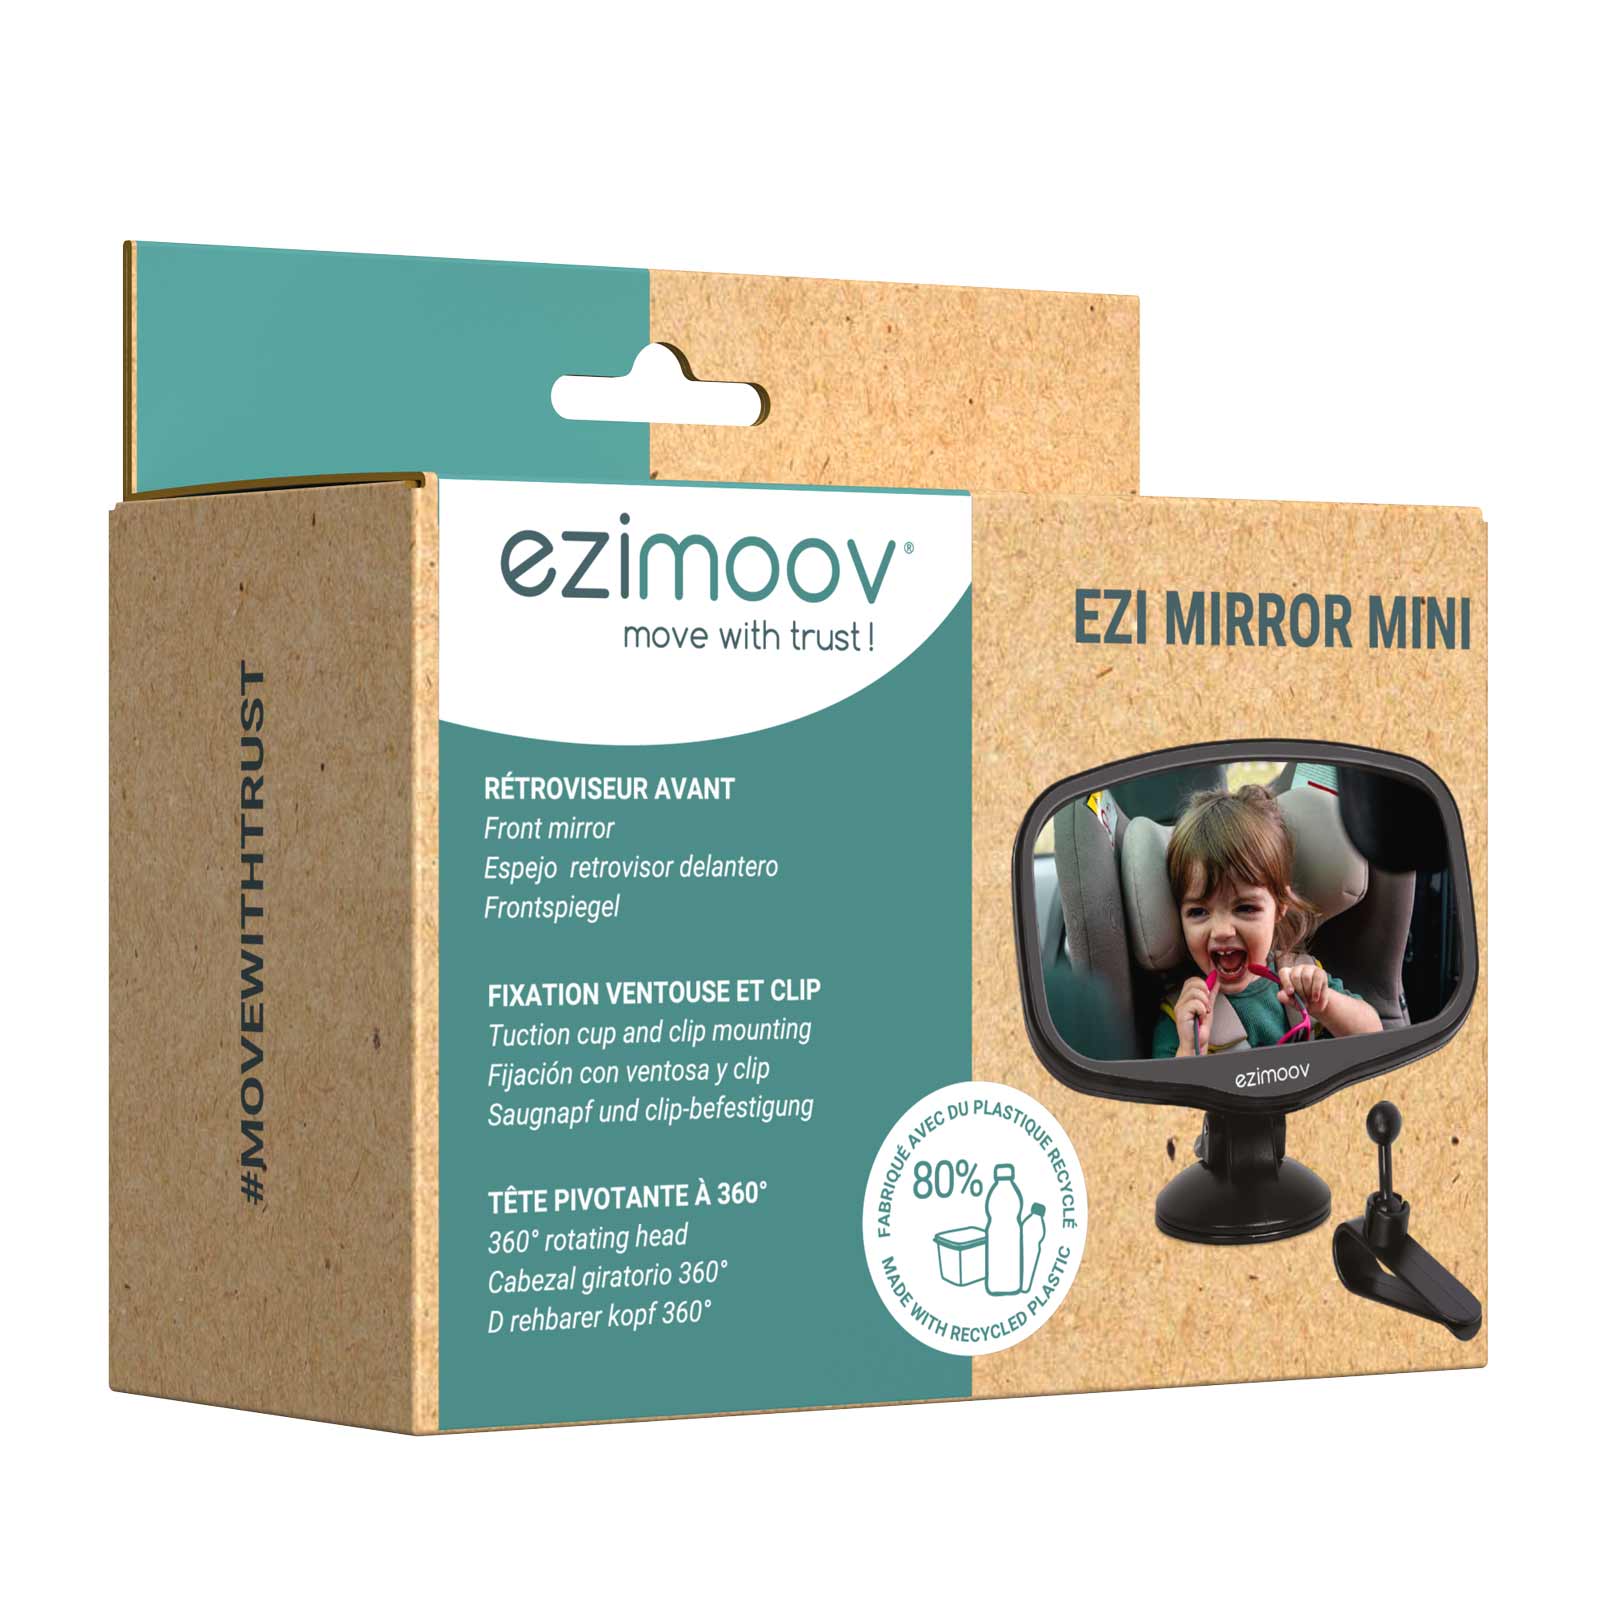 ezimoov_miroir_mini_ventouse_packaging_facing